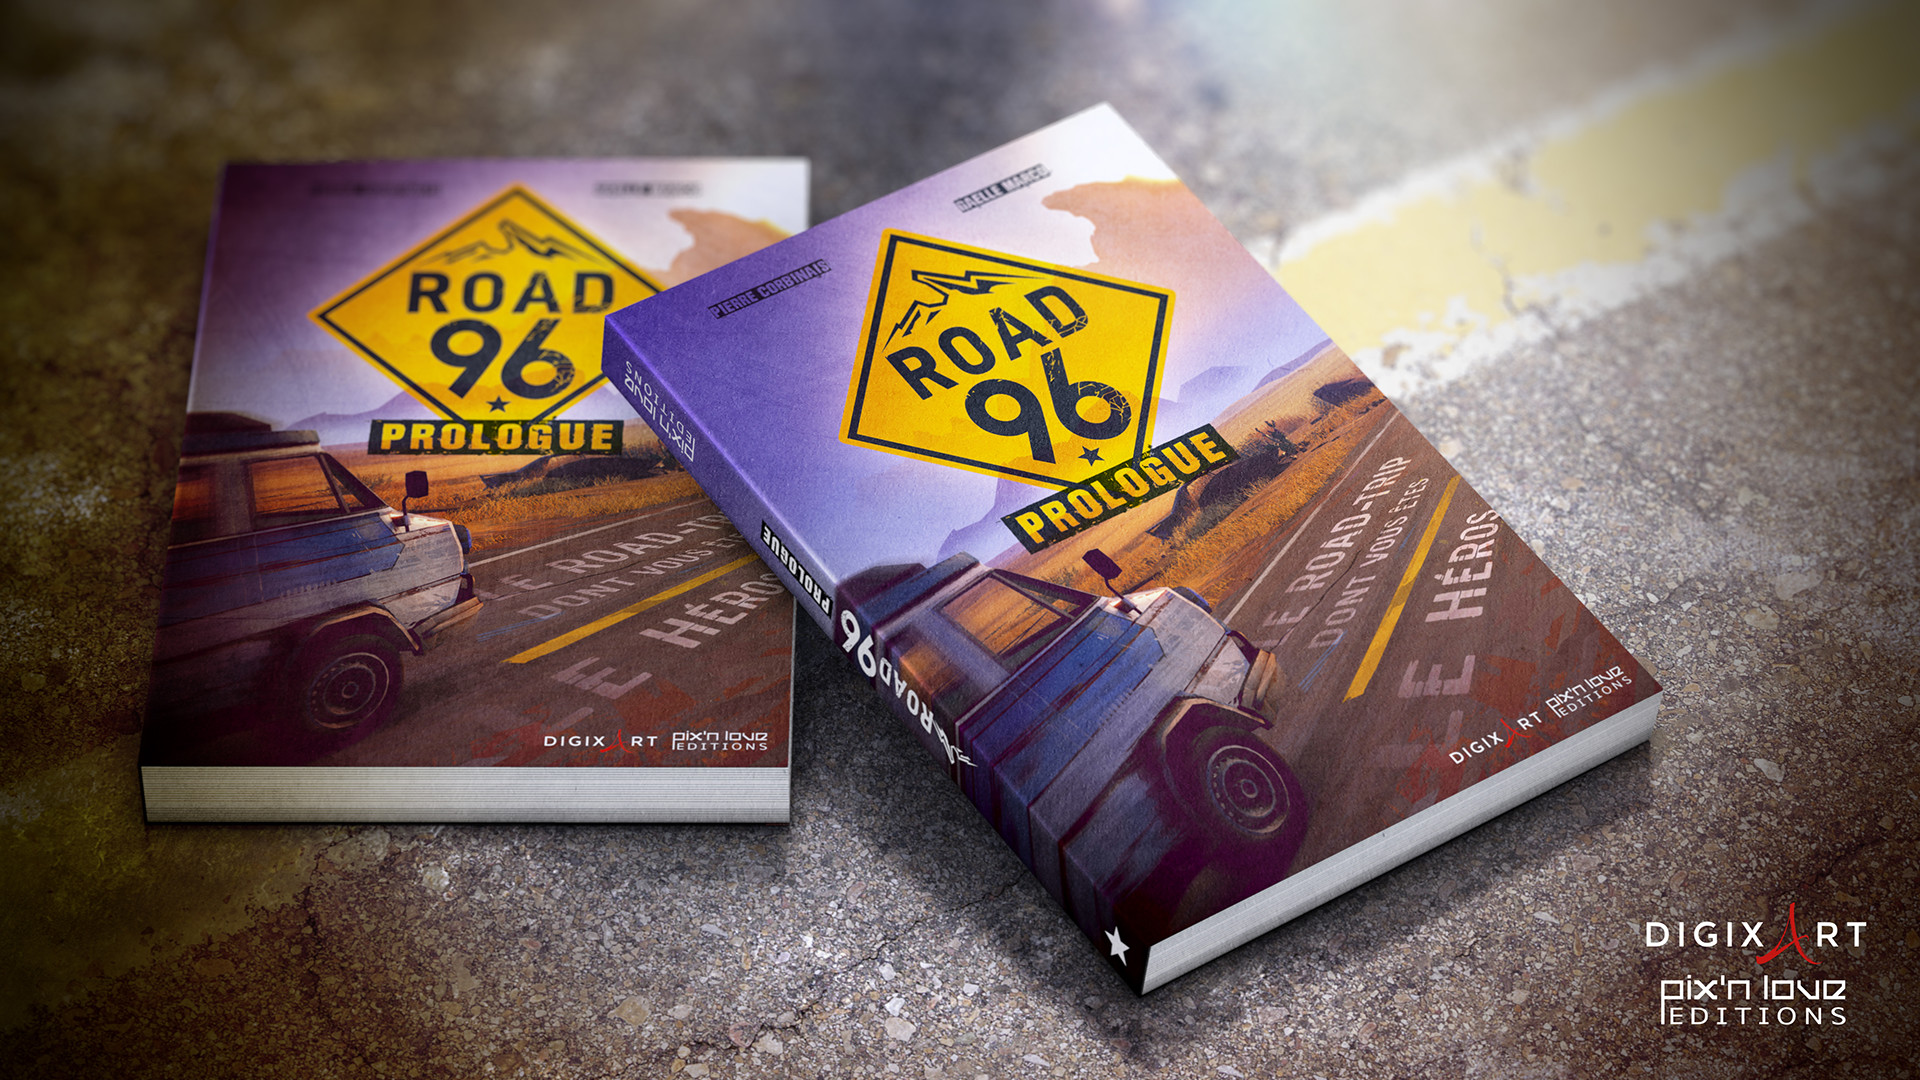 Road 96: Prologue eBook Featured Screenshot #1